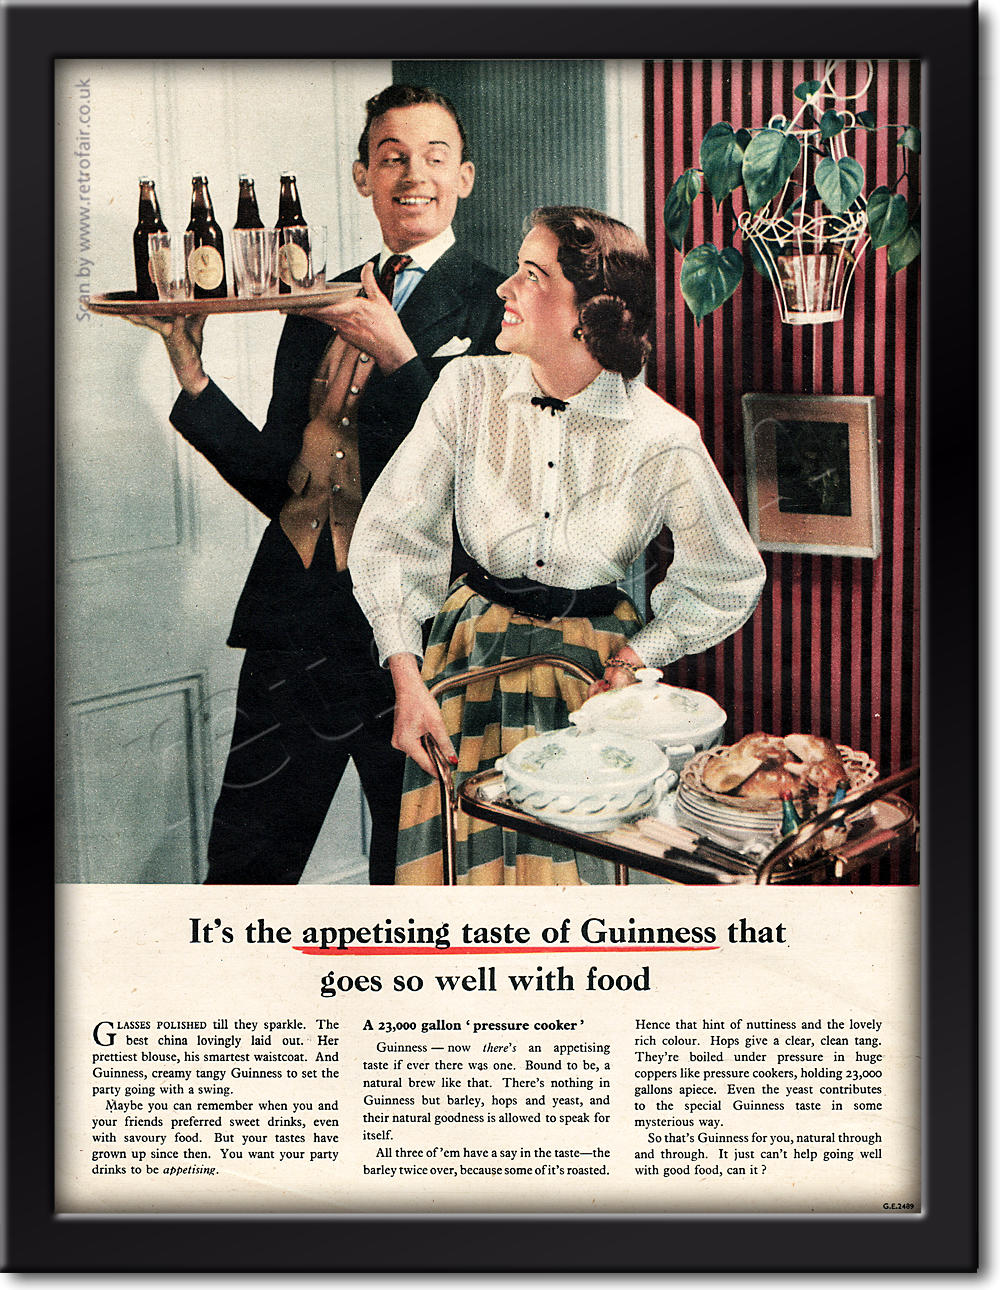 1955 vintage Guinness ad